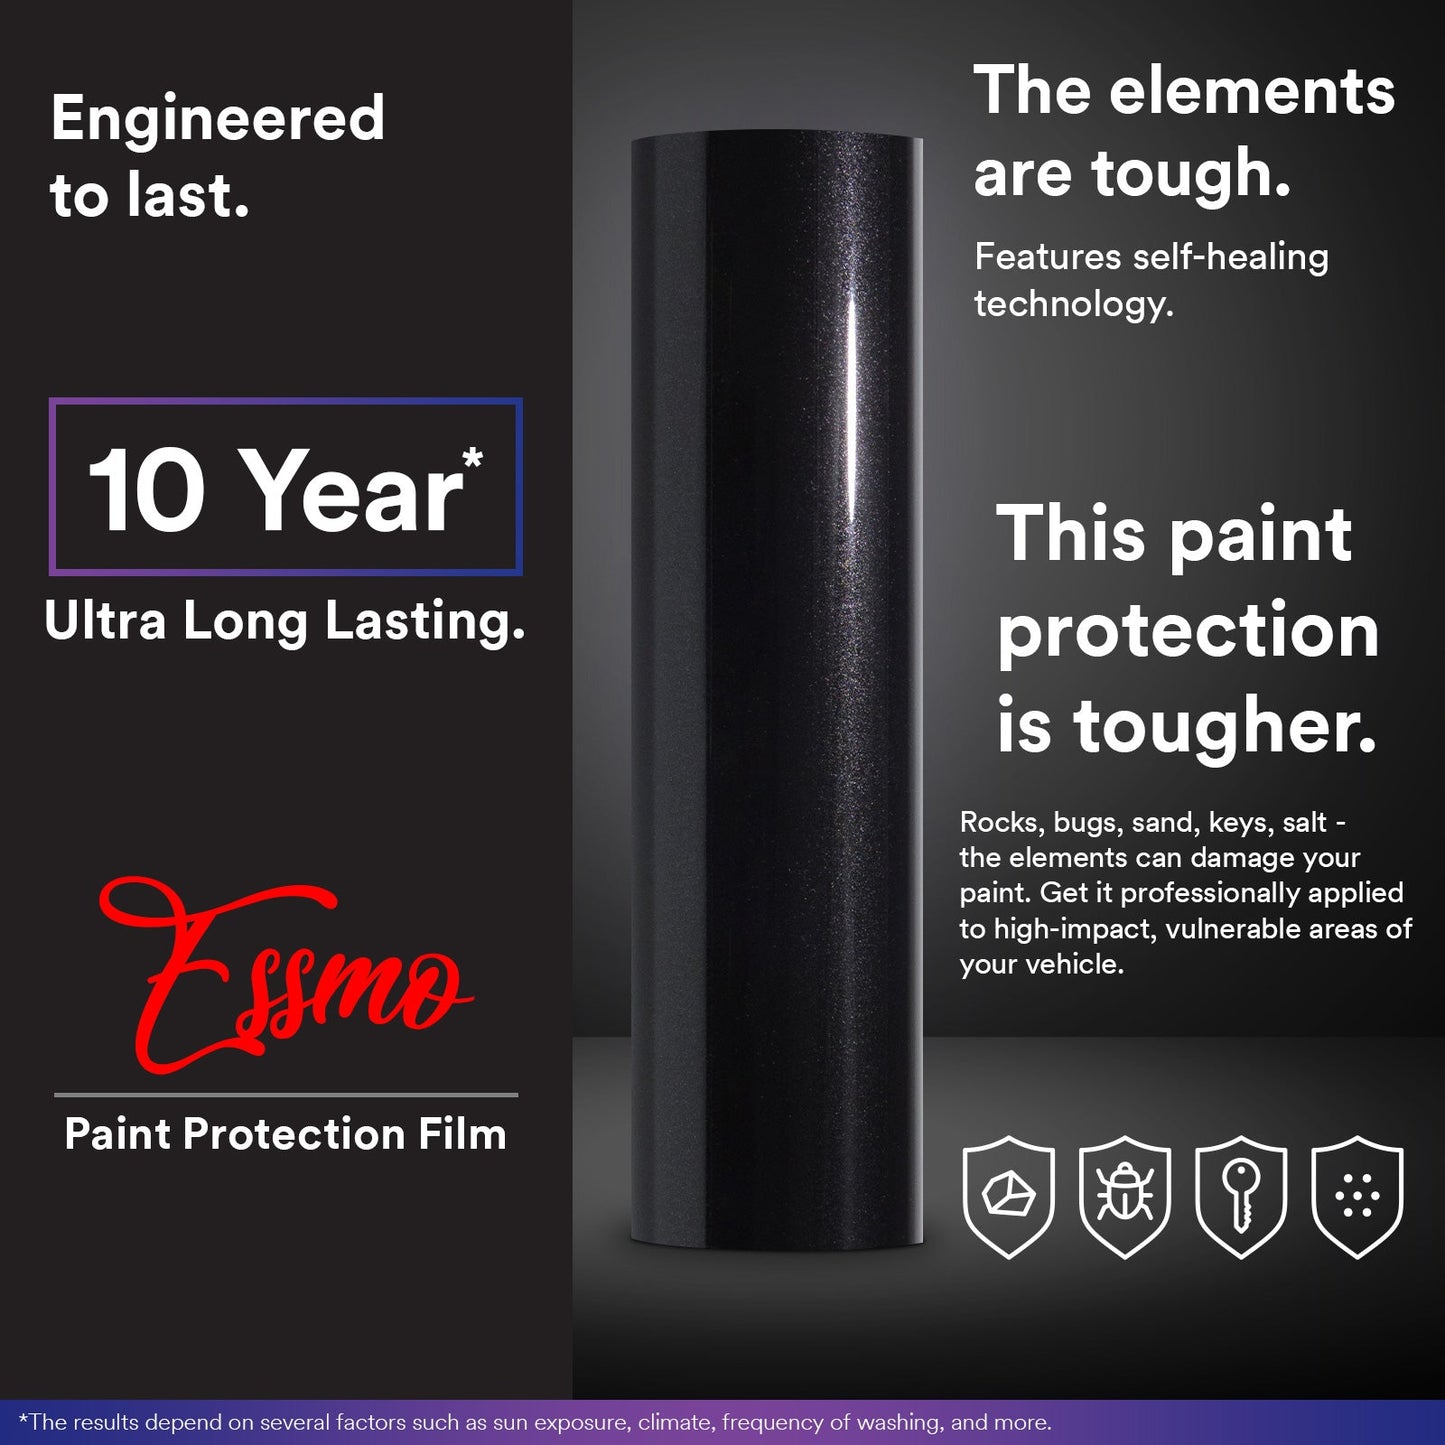 ESSMO Black Silver Metallic Paint Protection Film Gloss